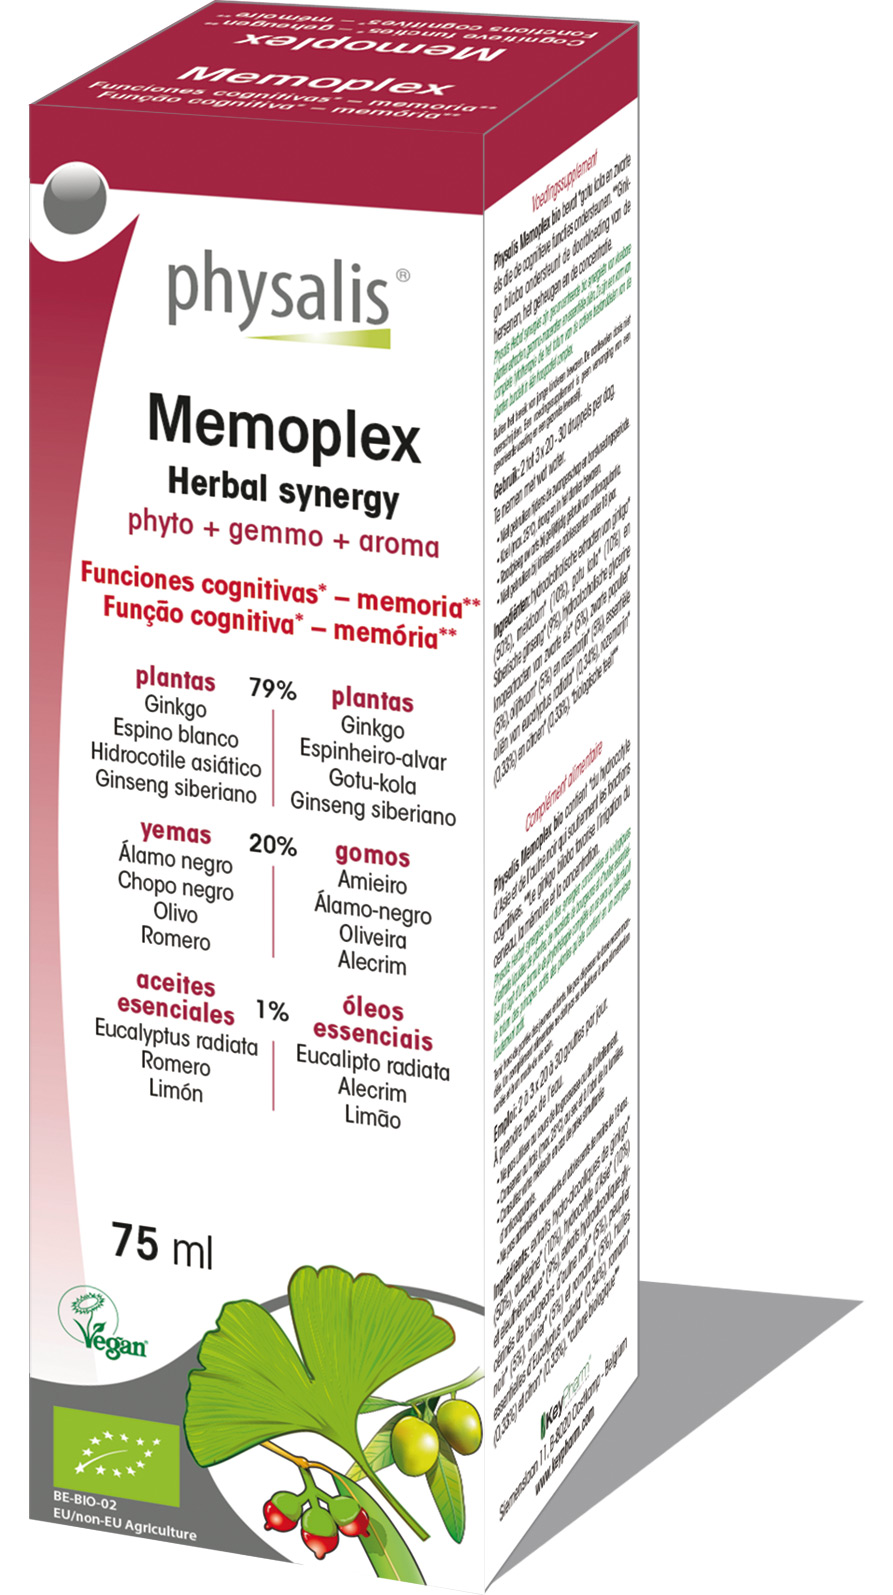 Memoplex - Herbal synergy